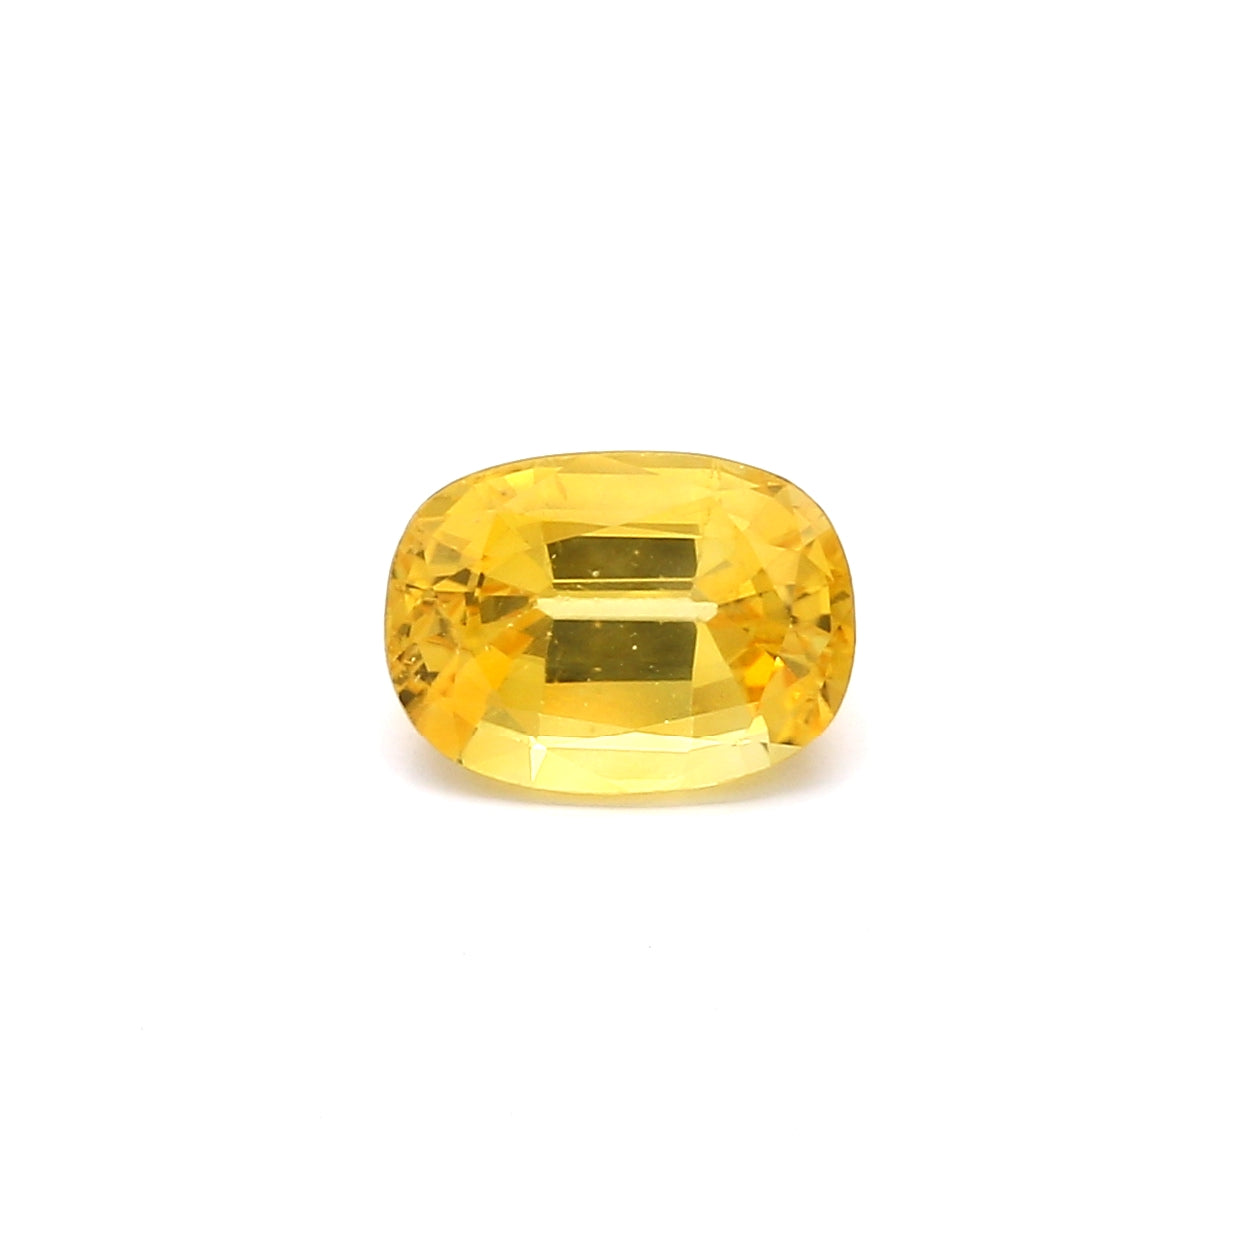 1.84ct Yellow, Oval Sapphire, Heated, Sri Lanka - 8.18 x 6.04 x 4.17mm